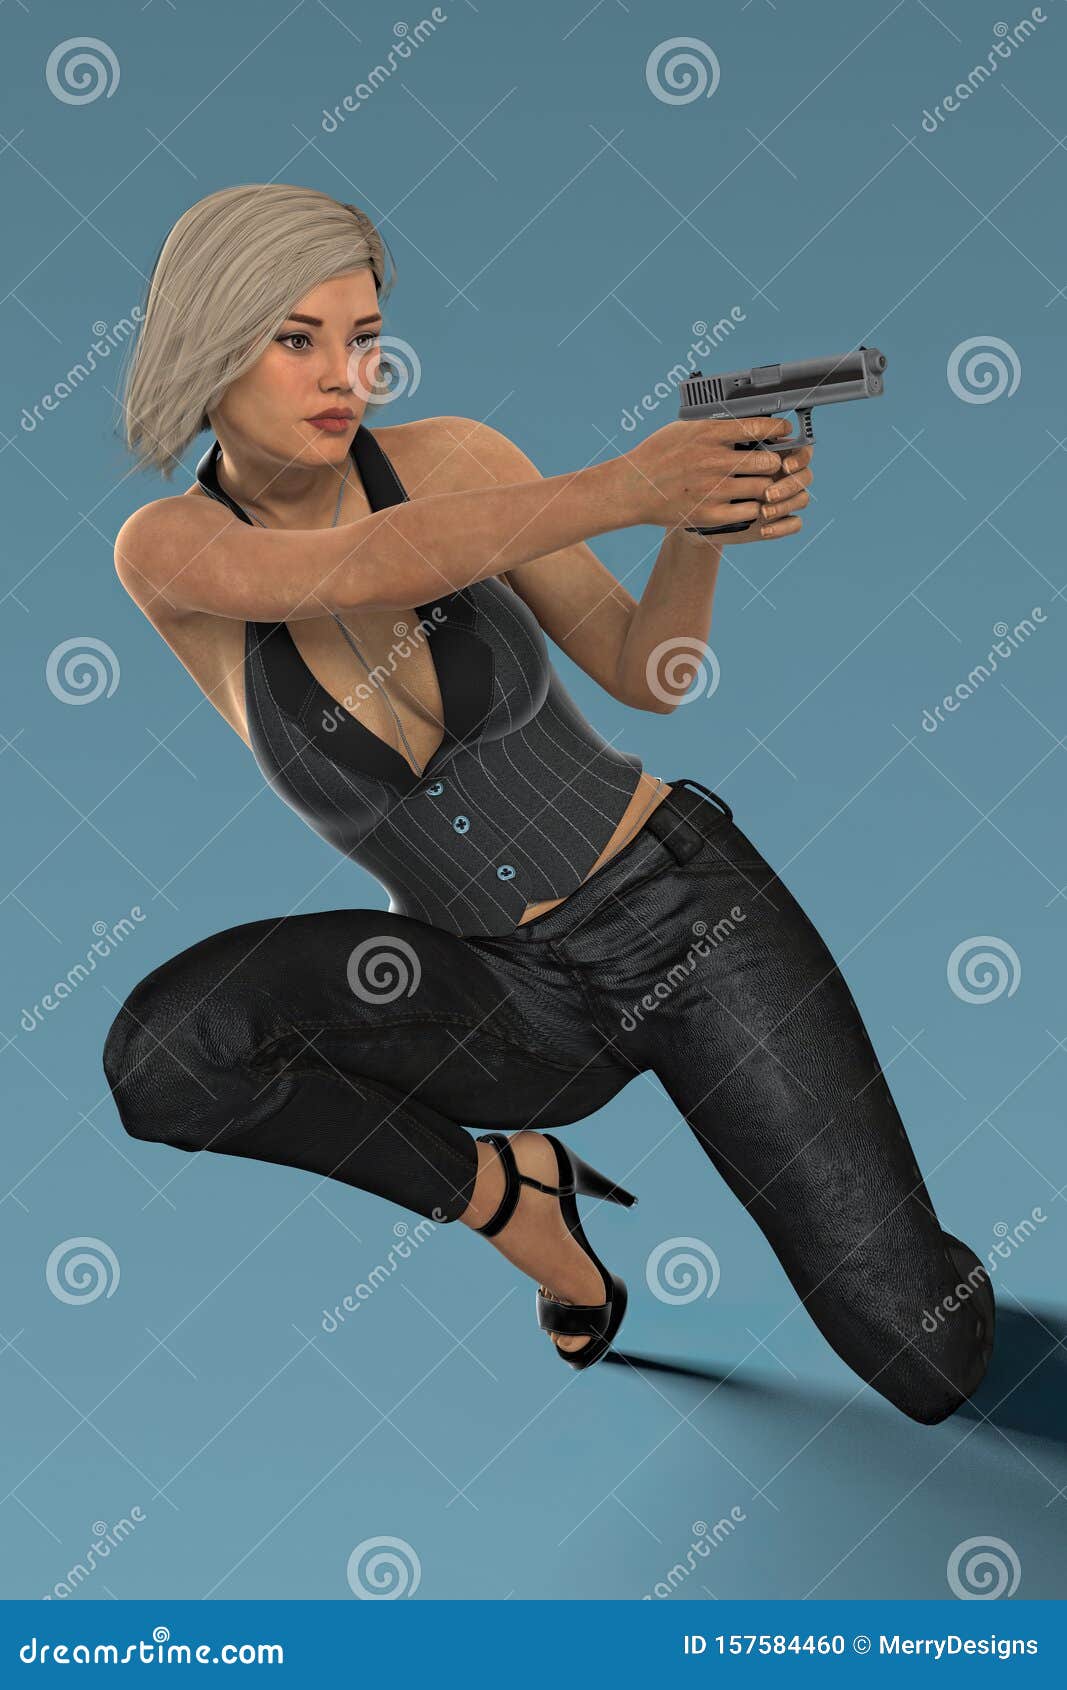 Dynamic pose of an anime girl holding a gun on Craiyon